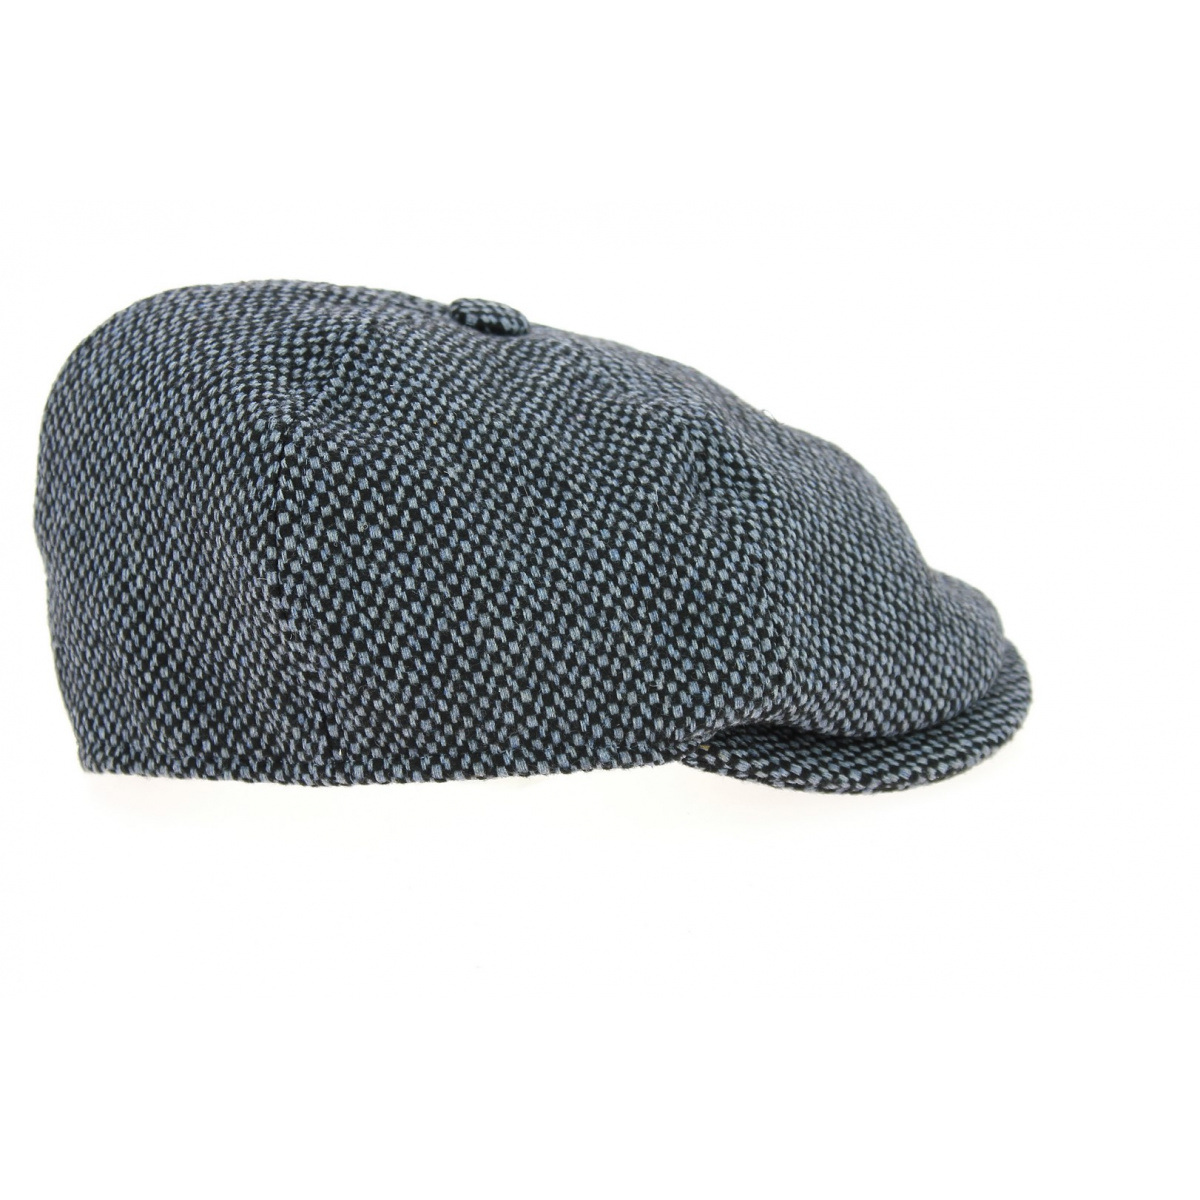 Peaky Blinder Cap - Buy online for men and women